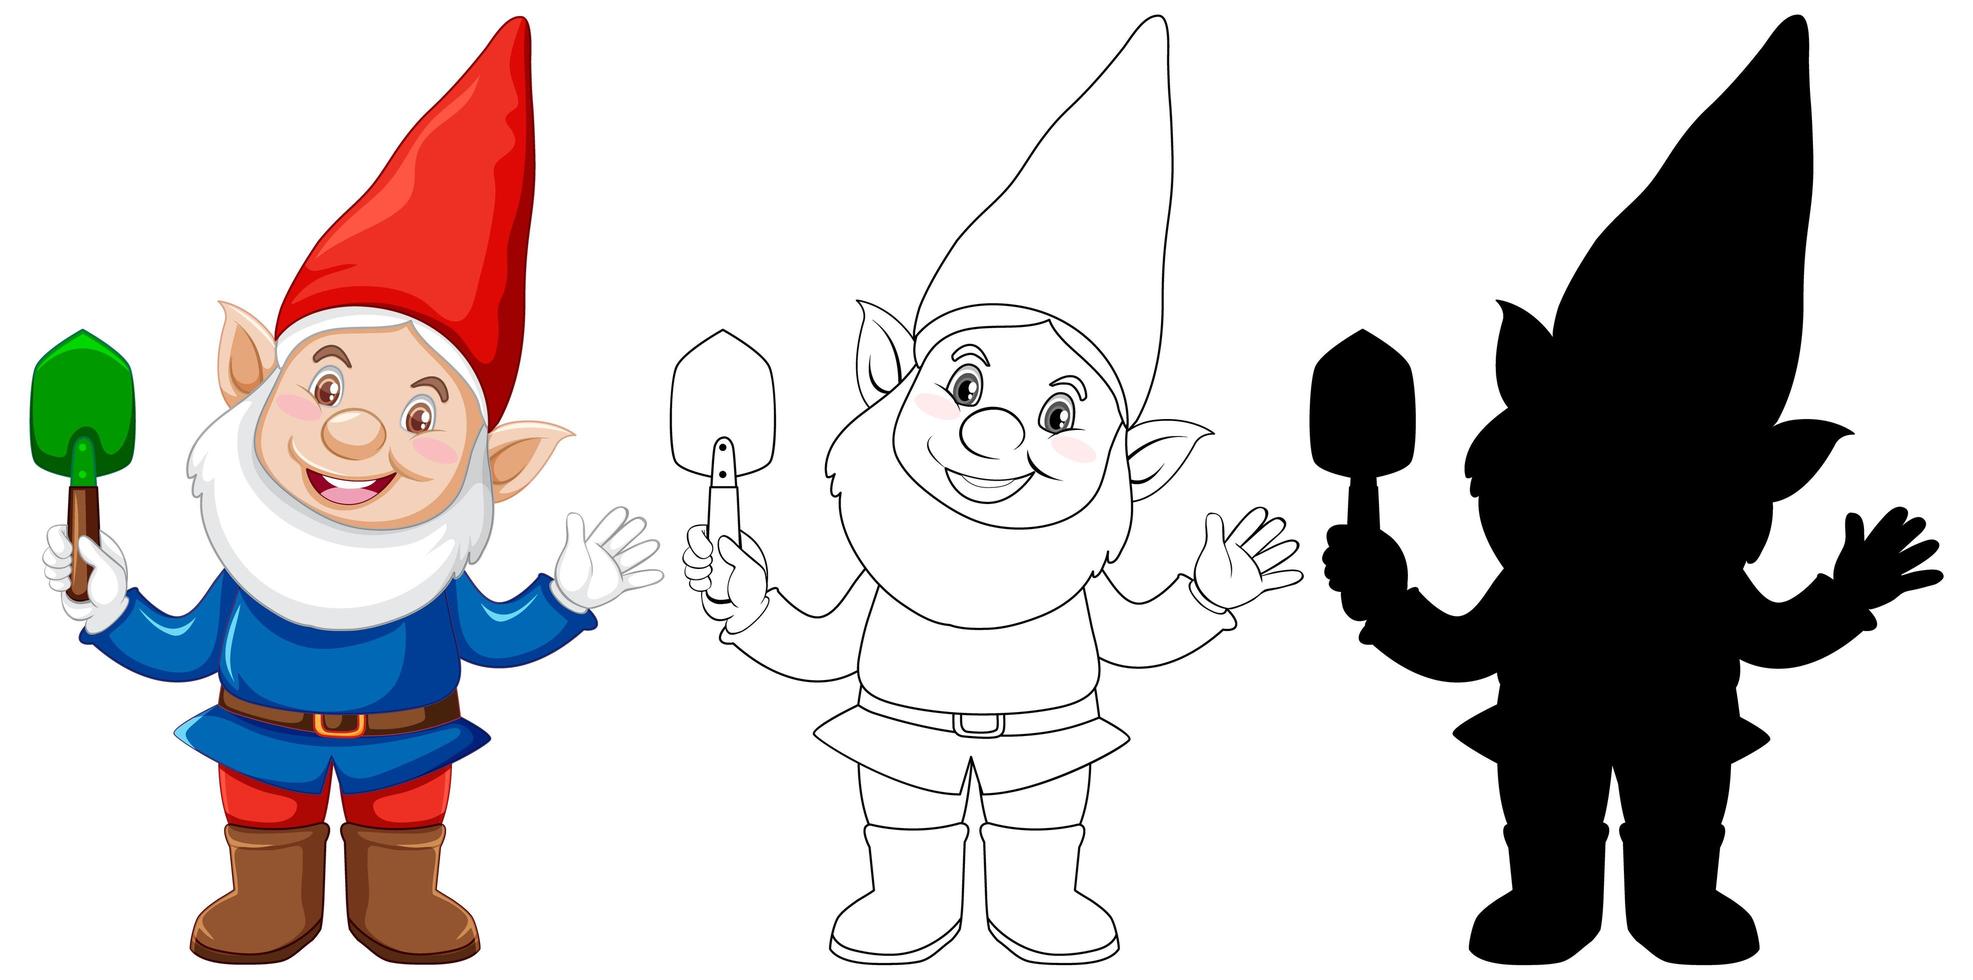 Garden gnome character set vector